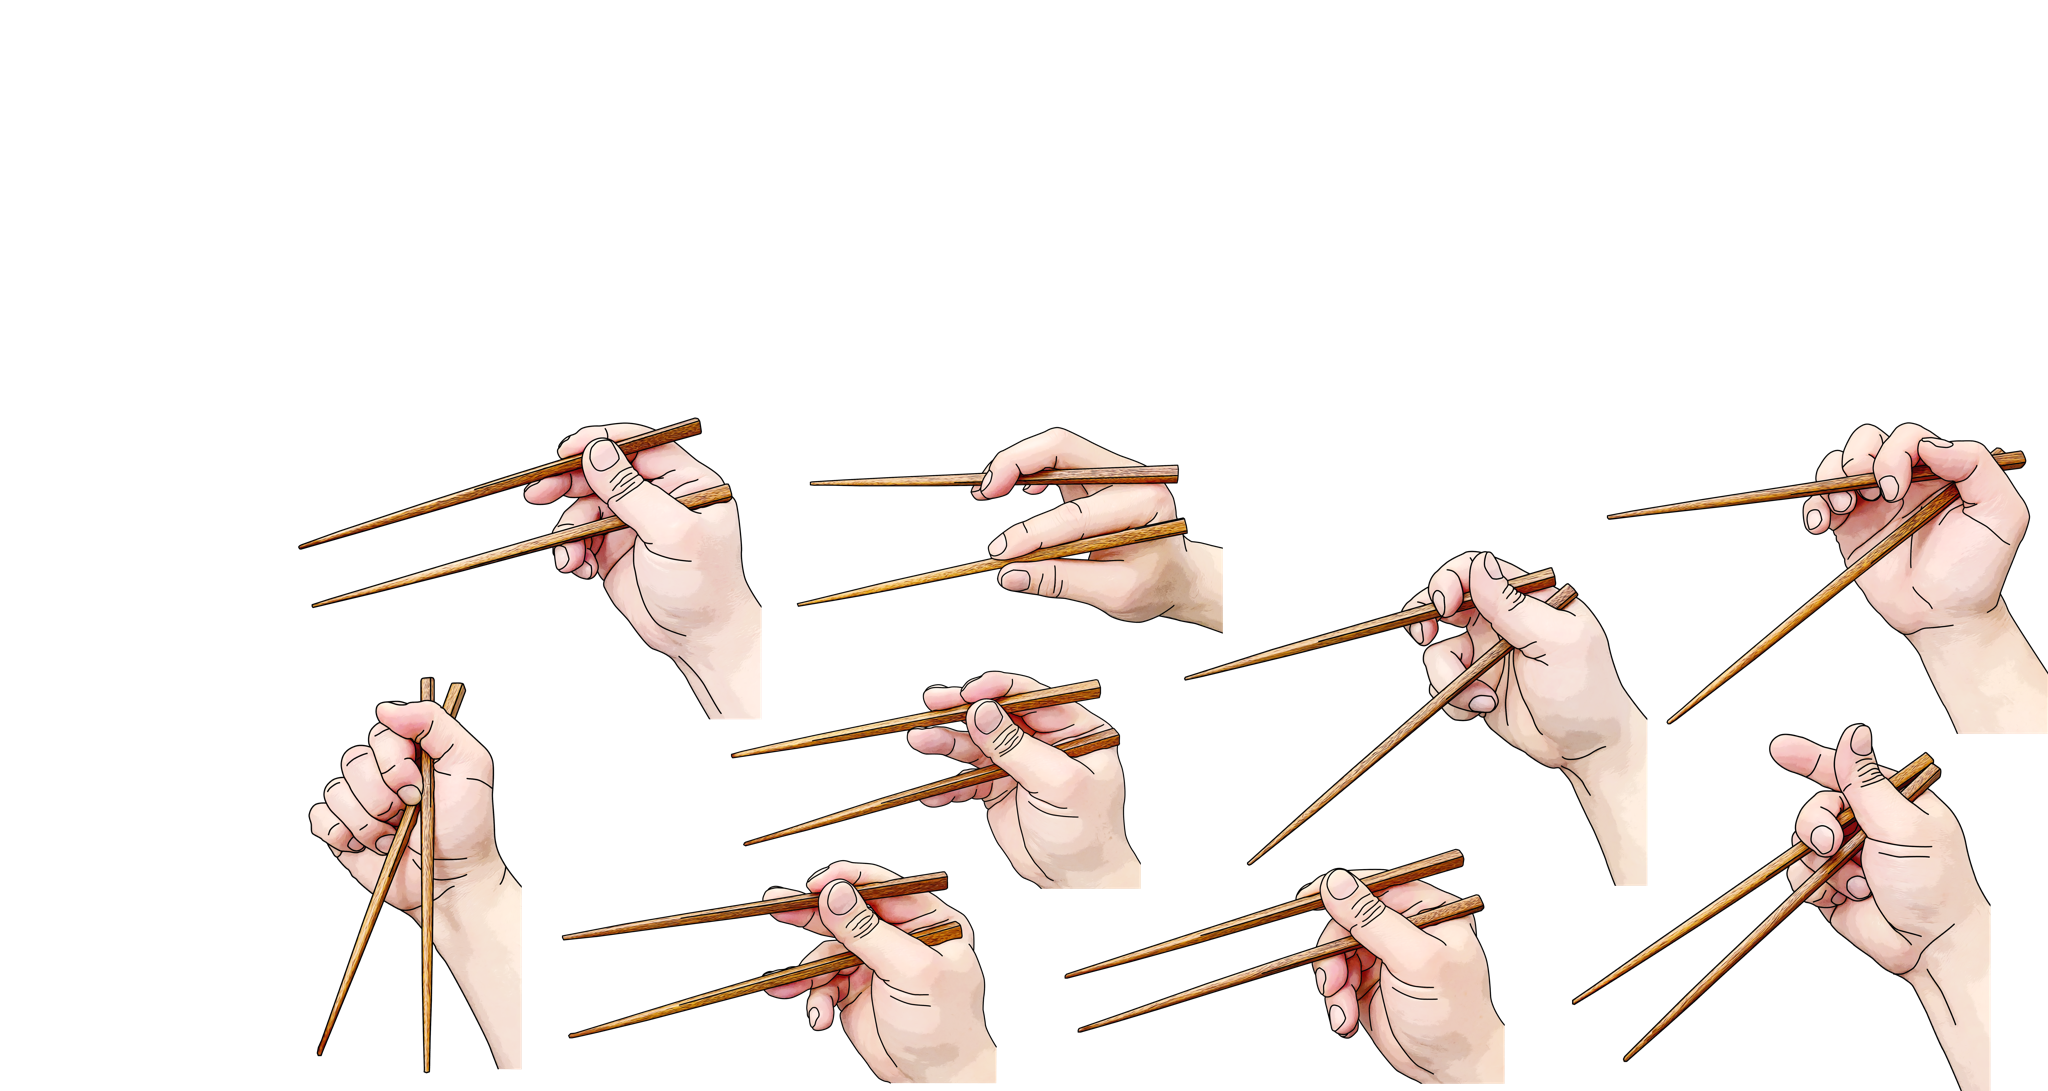 Thousand ways to use chopsticks - home page block bg - IMG_2321-2pt - padded-scaled